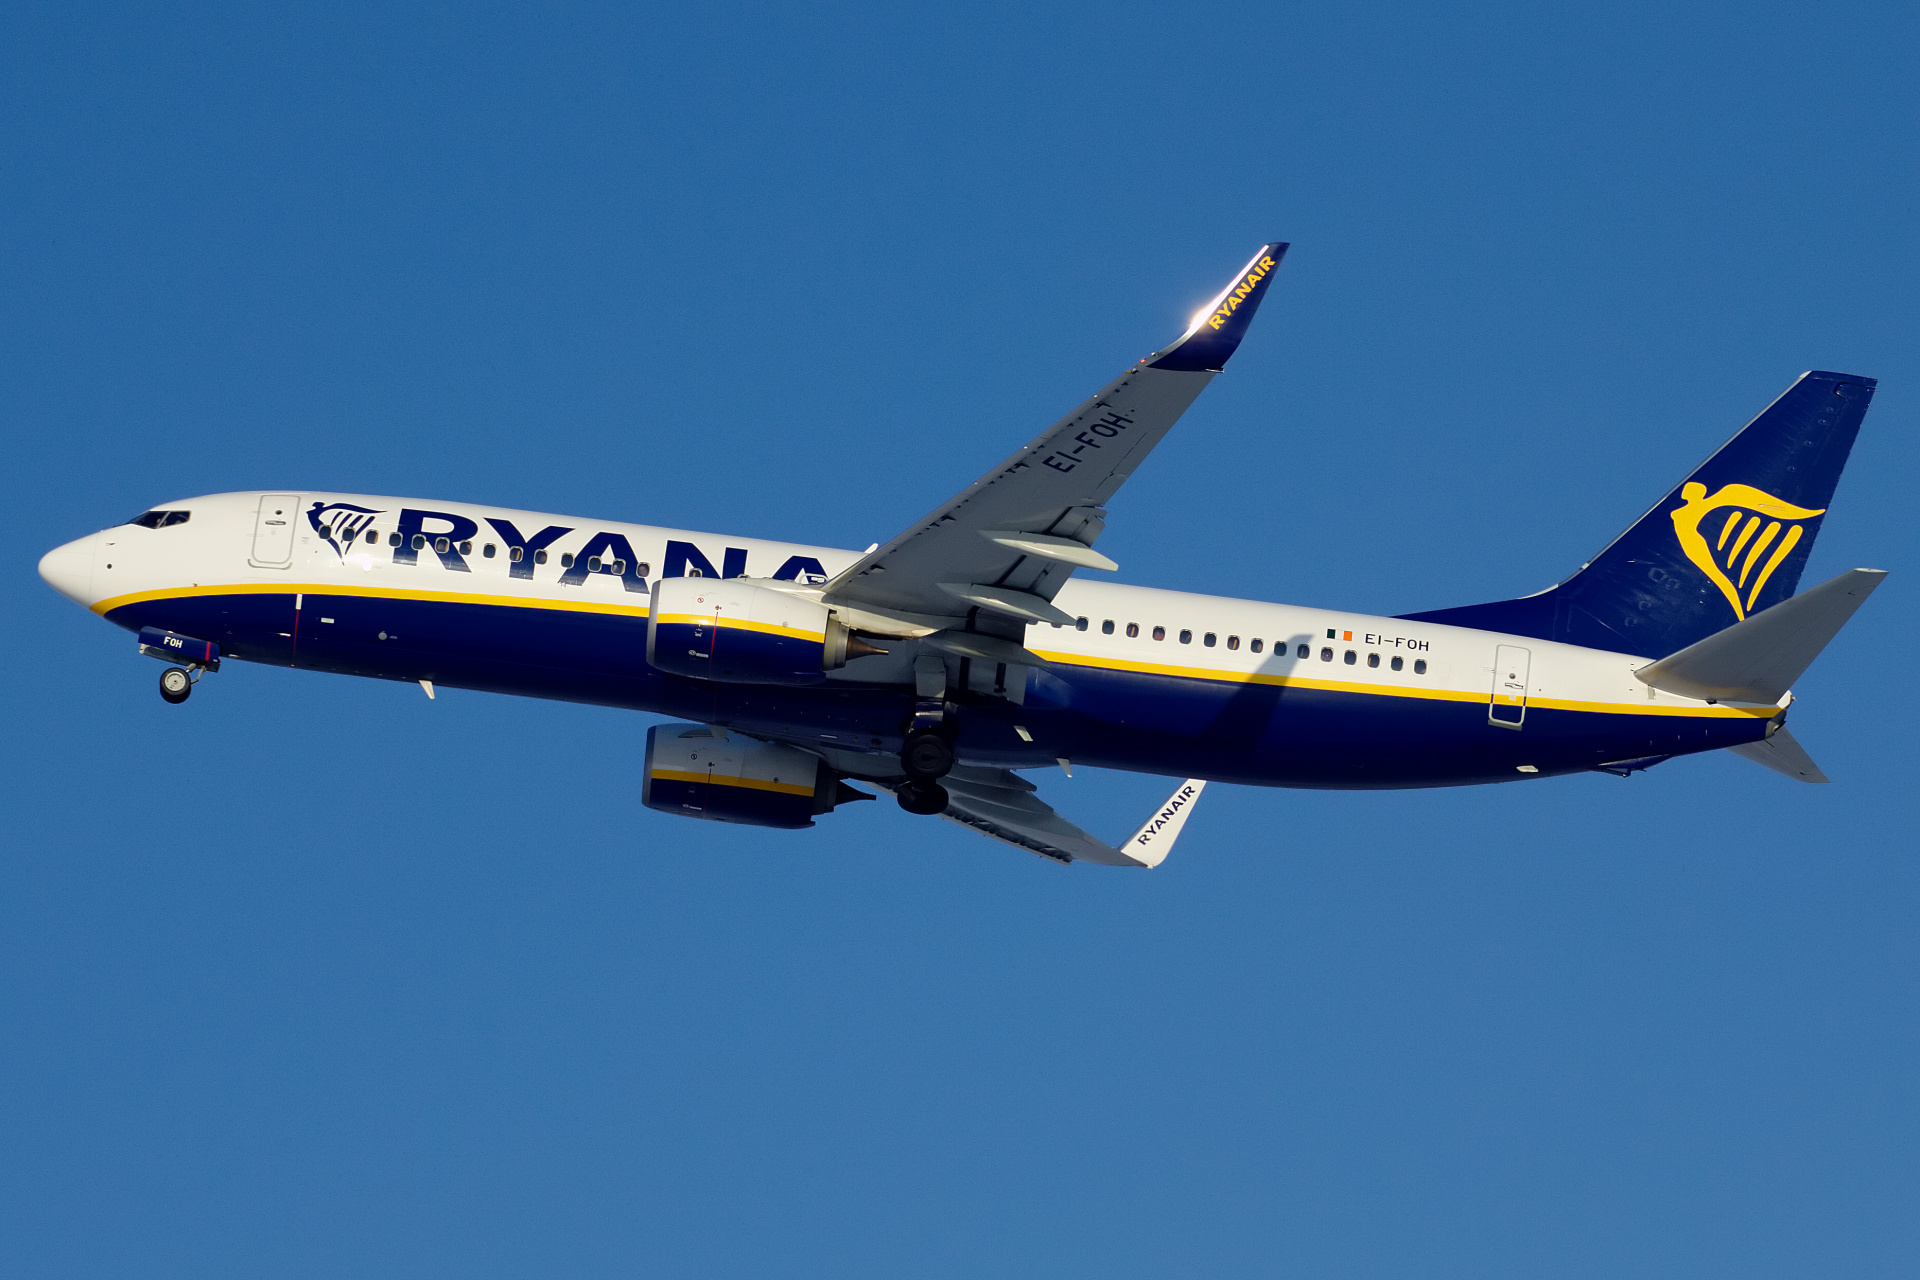 EI-FOH (Aircraft » EPWA Spotting » Boeing 737-800 » Ryanair)